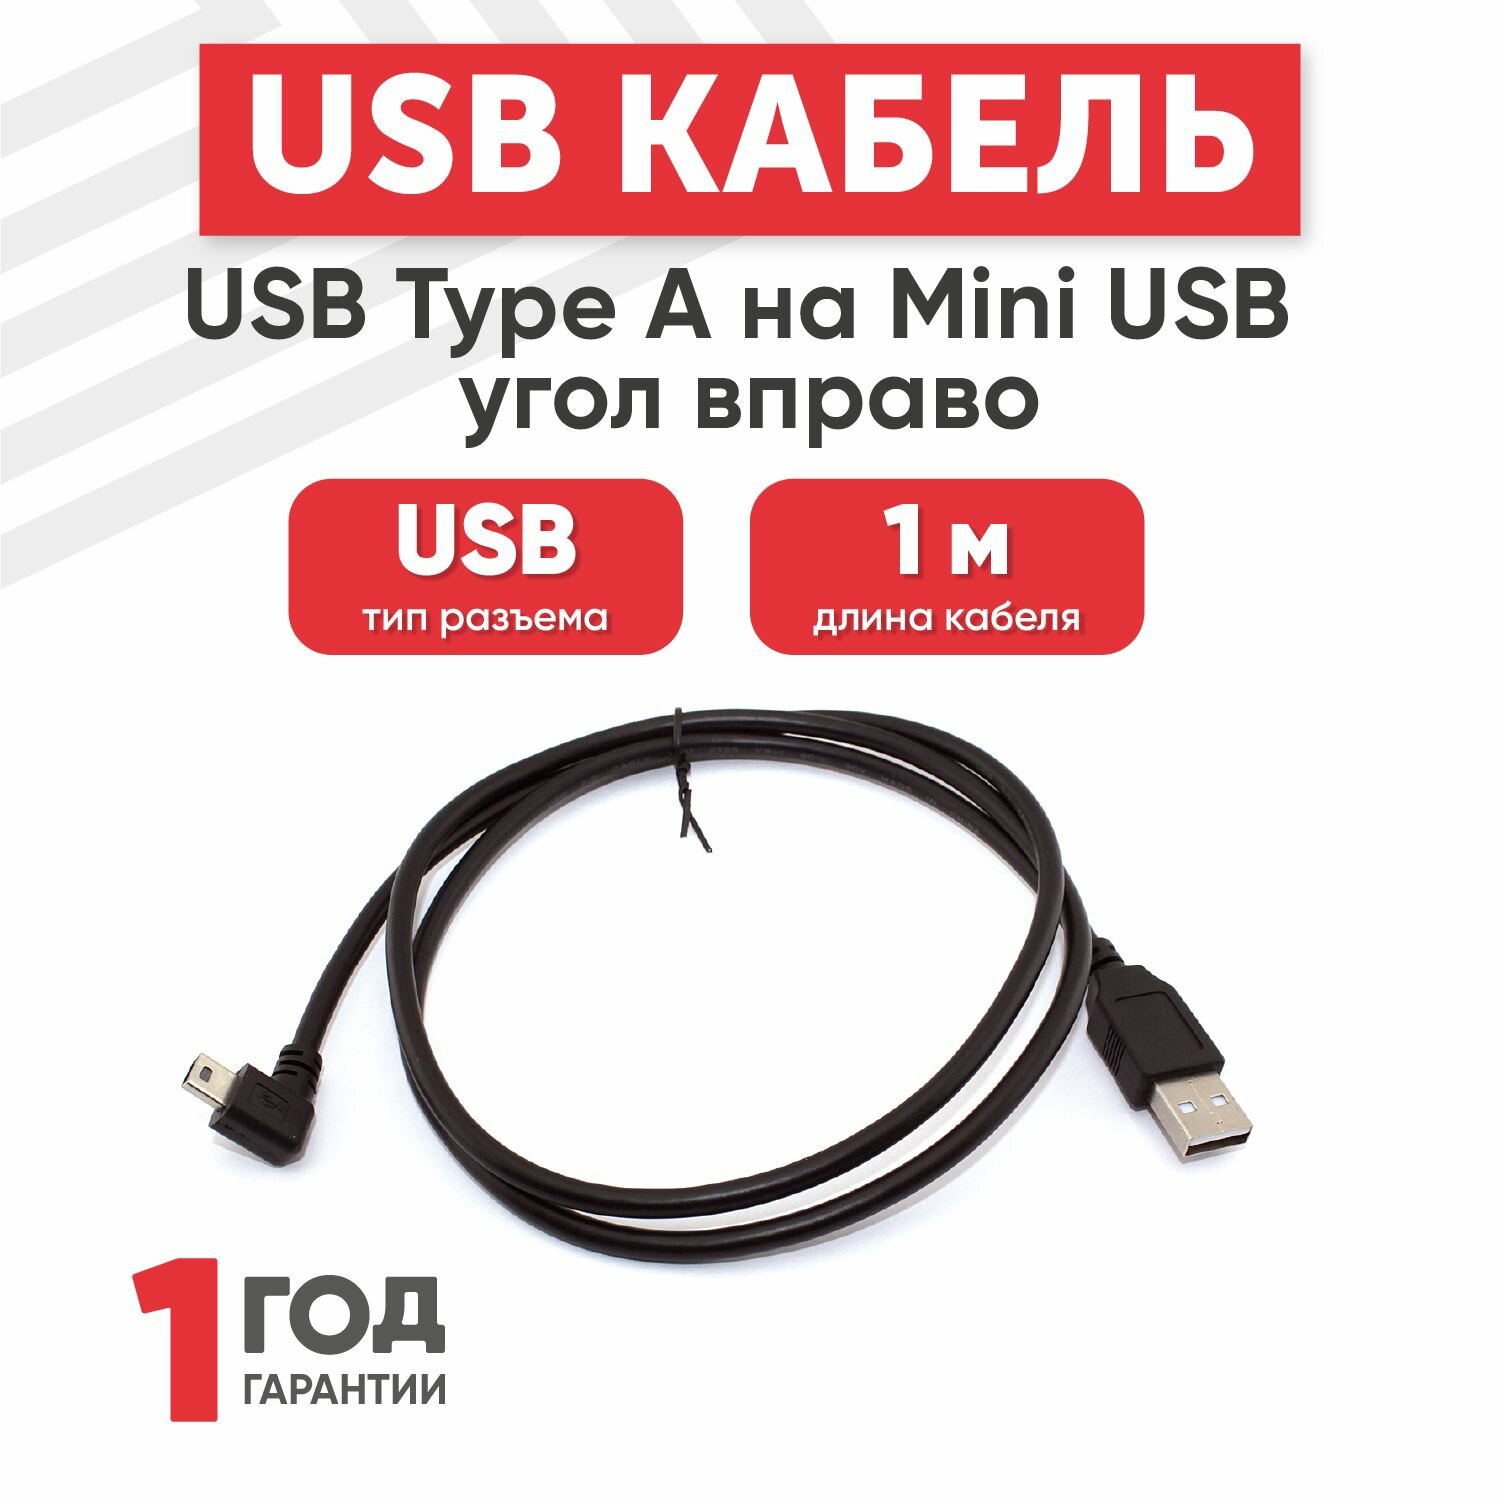 Кабель USB Type-A на MiniUSB угол вправо, длина 1 метр